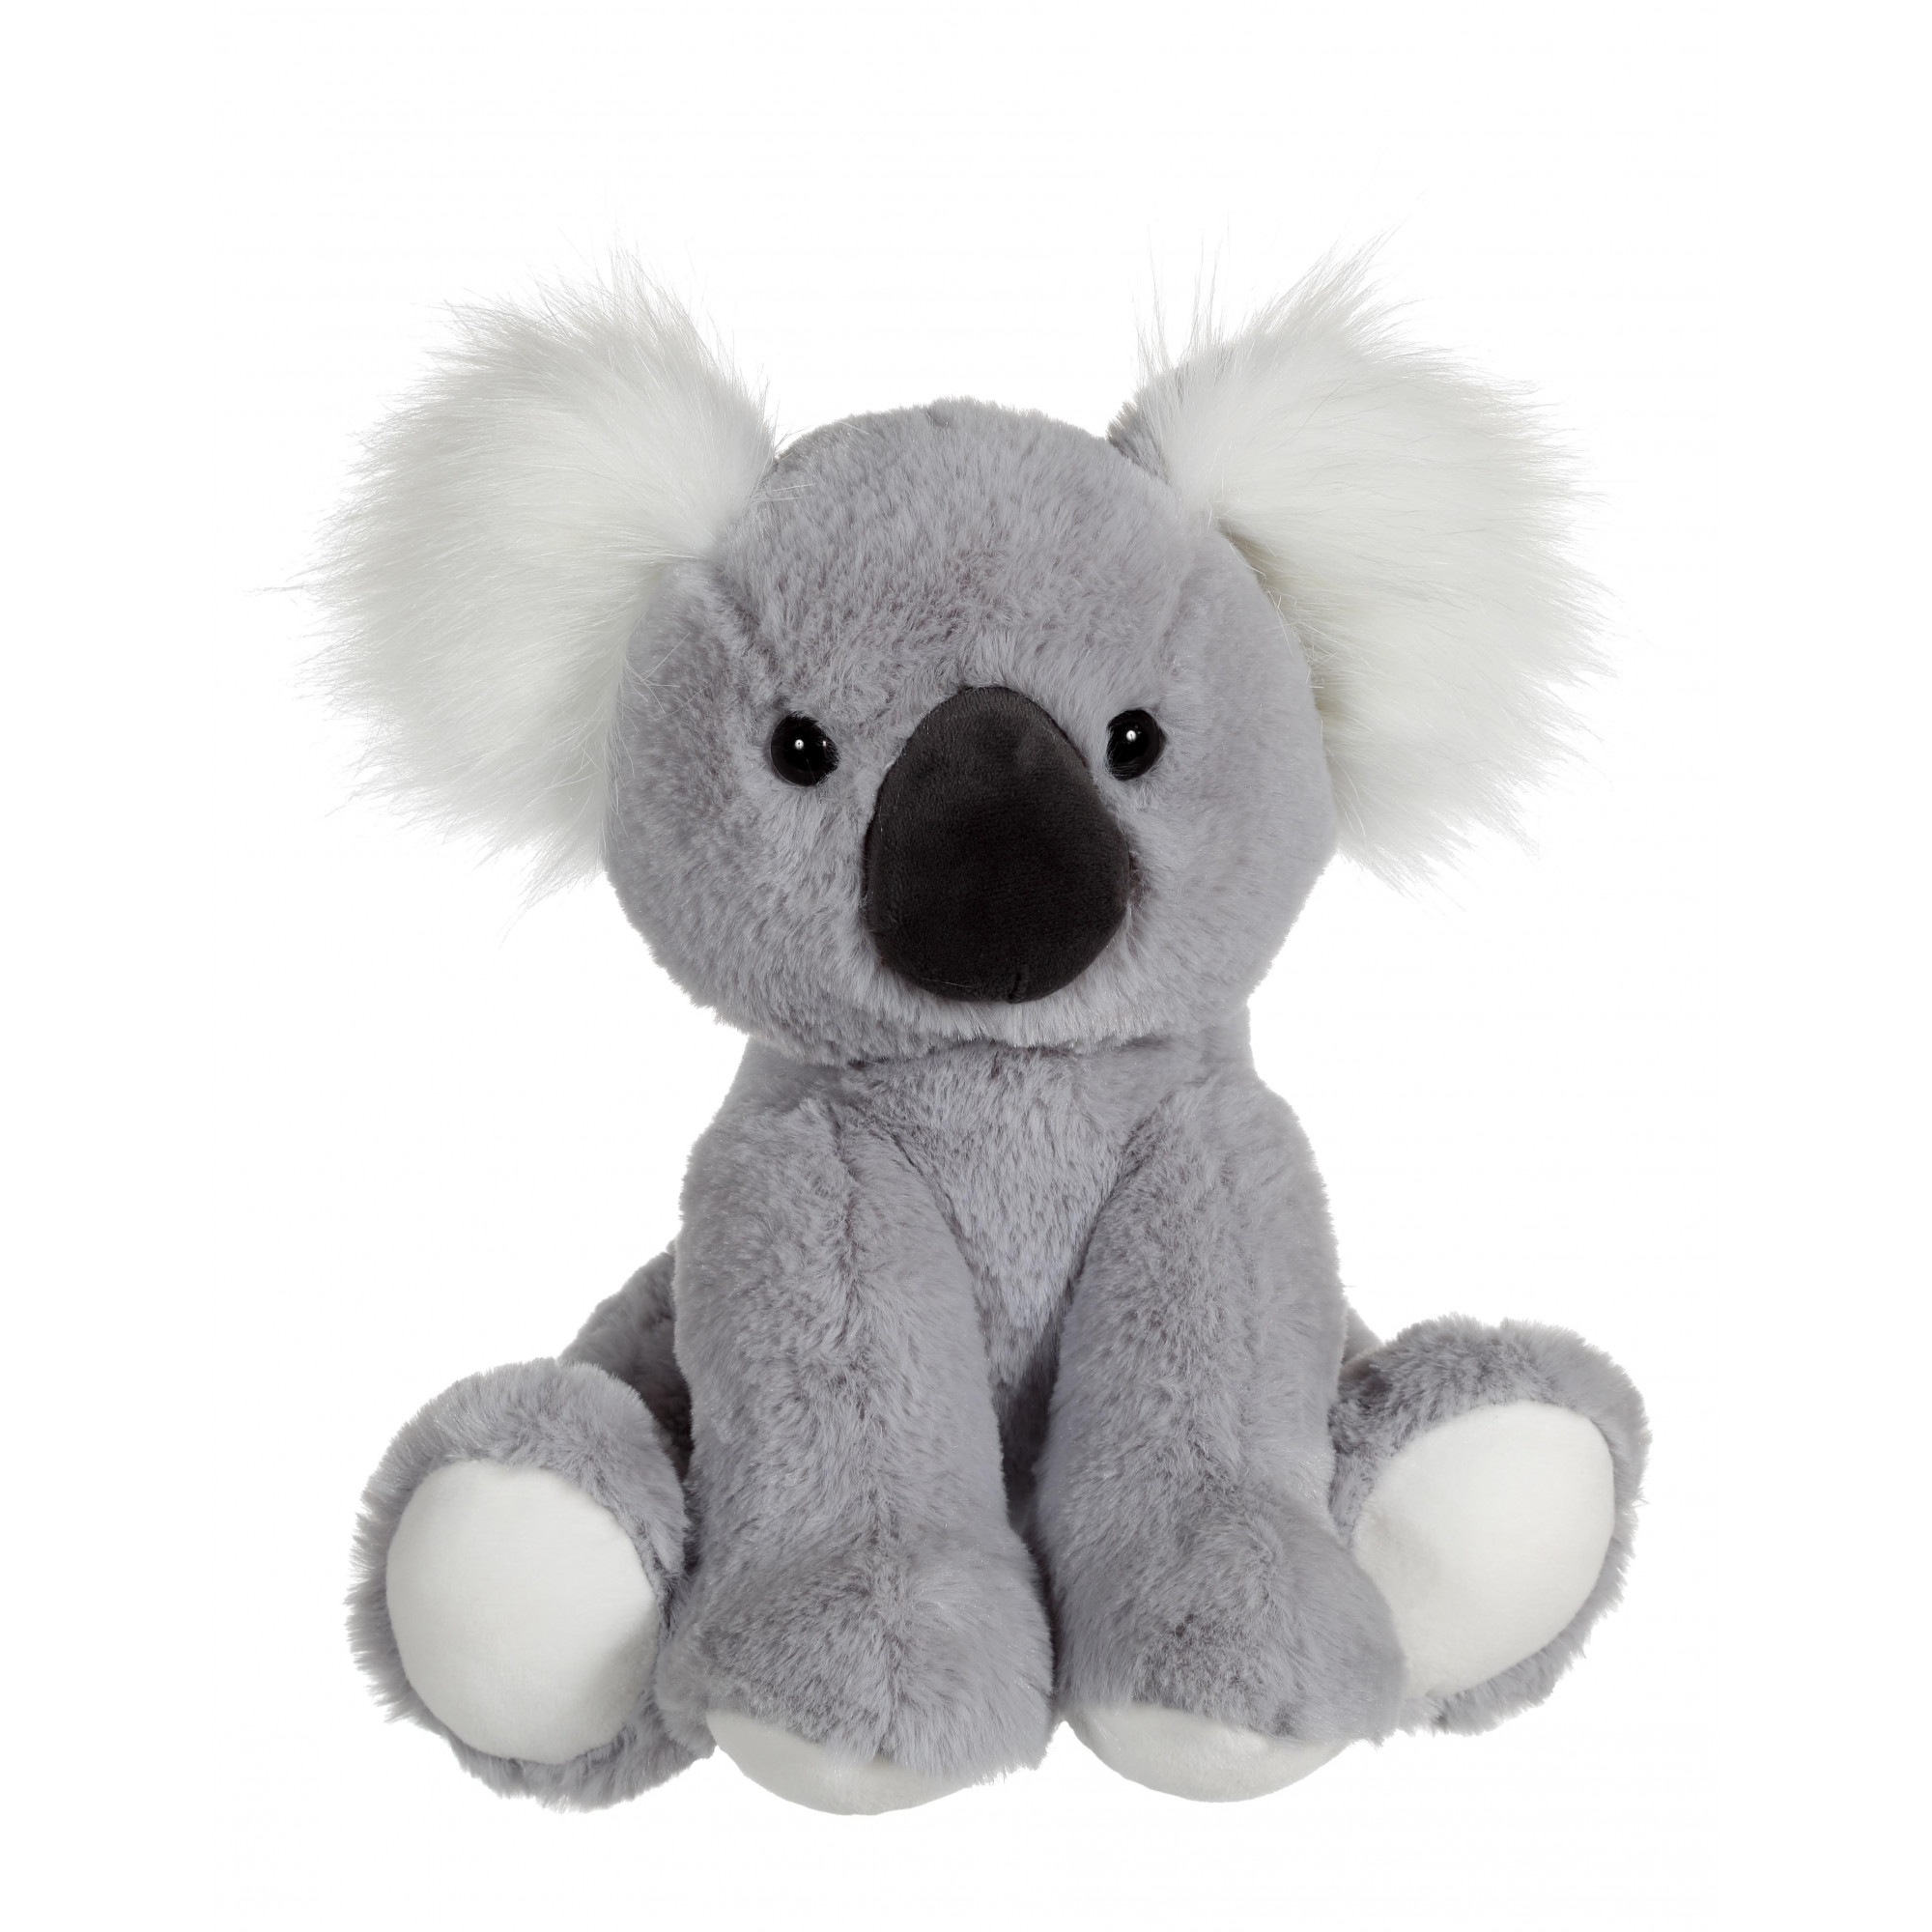 Doudou boule 3 en 1 personnalisé - Koala gris